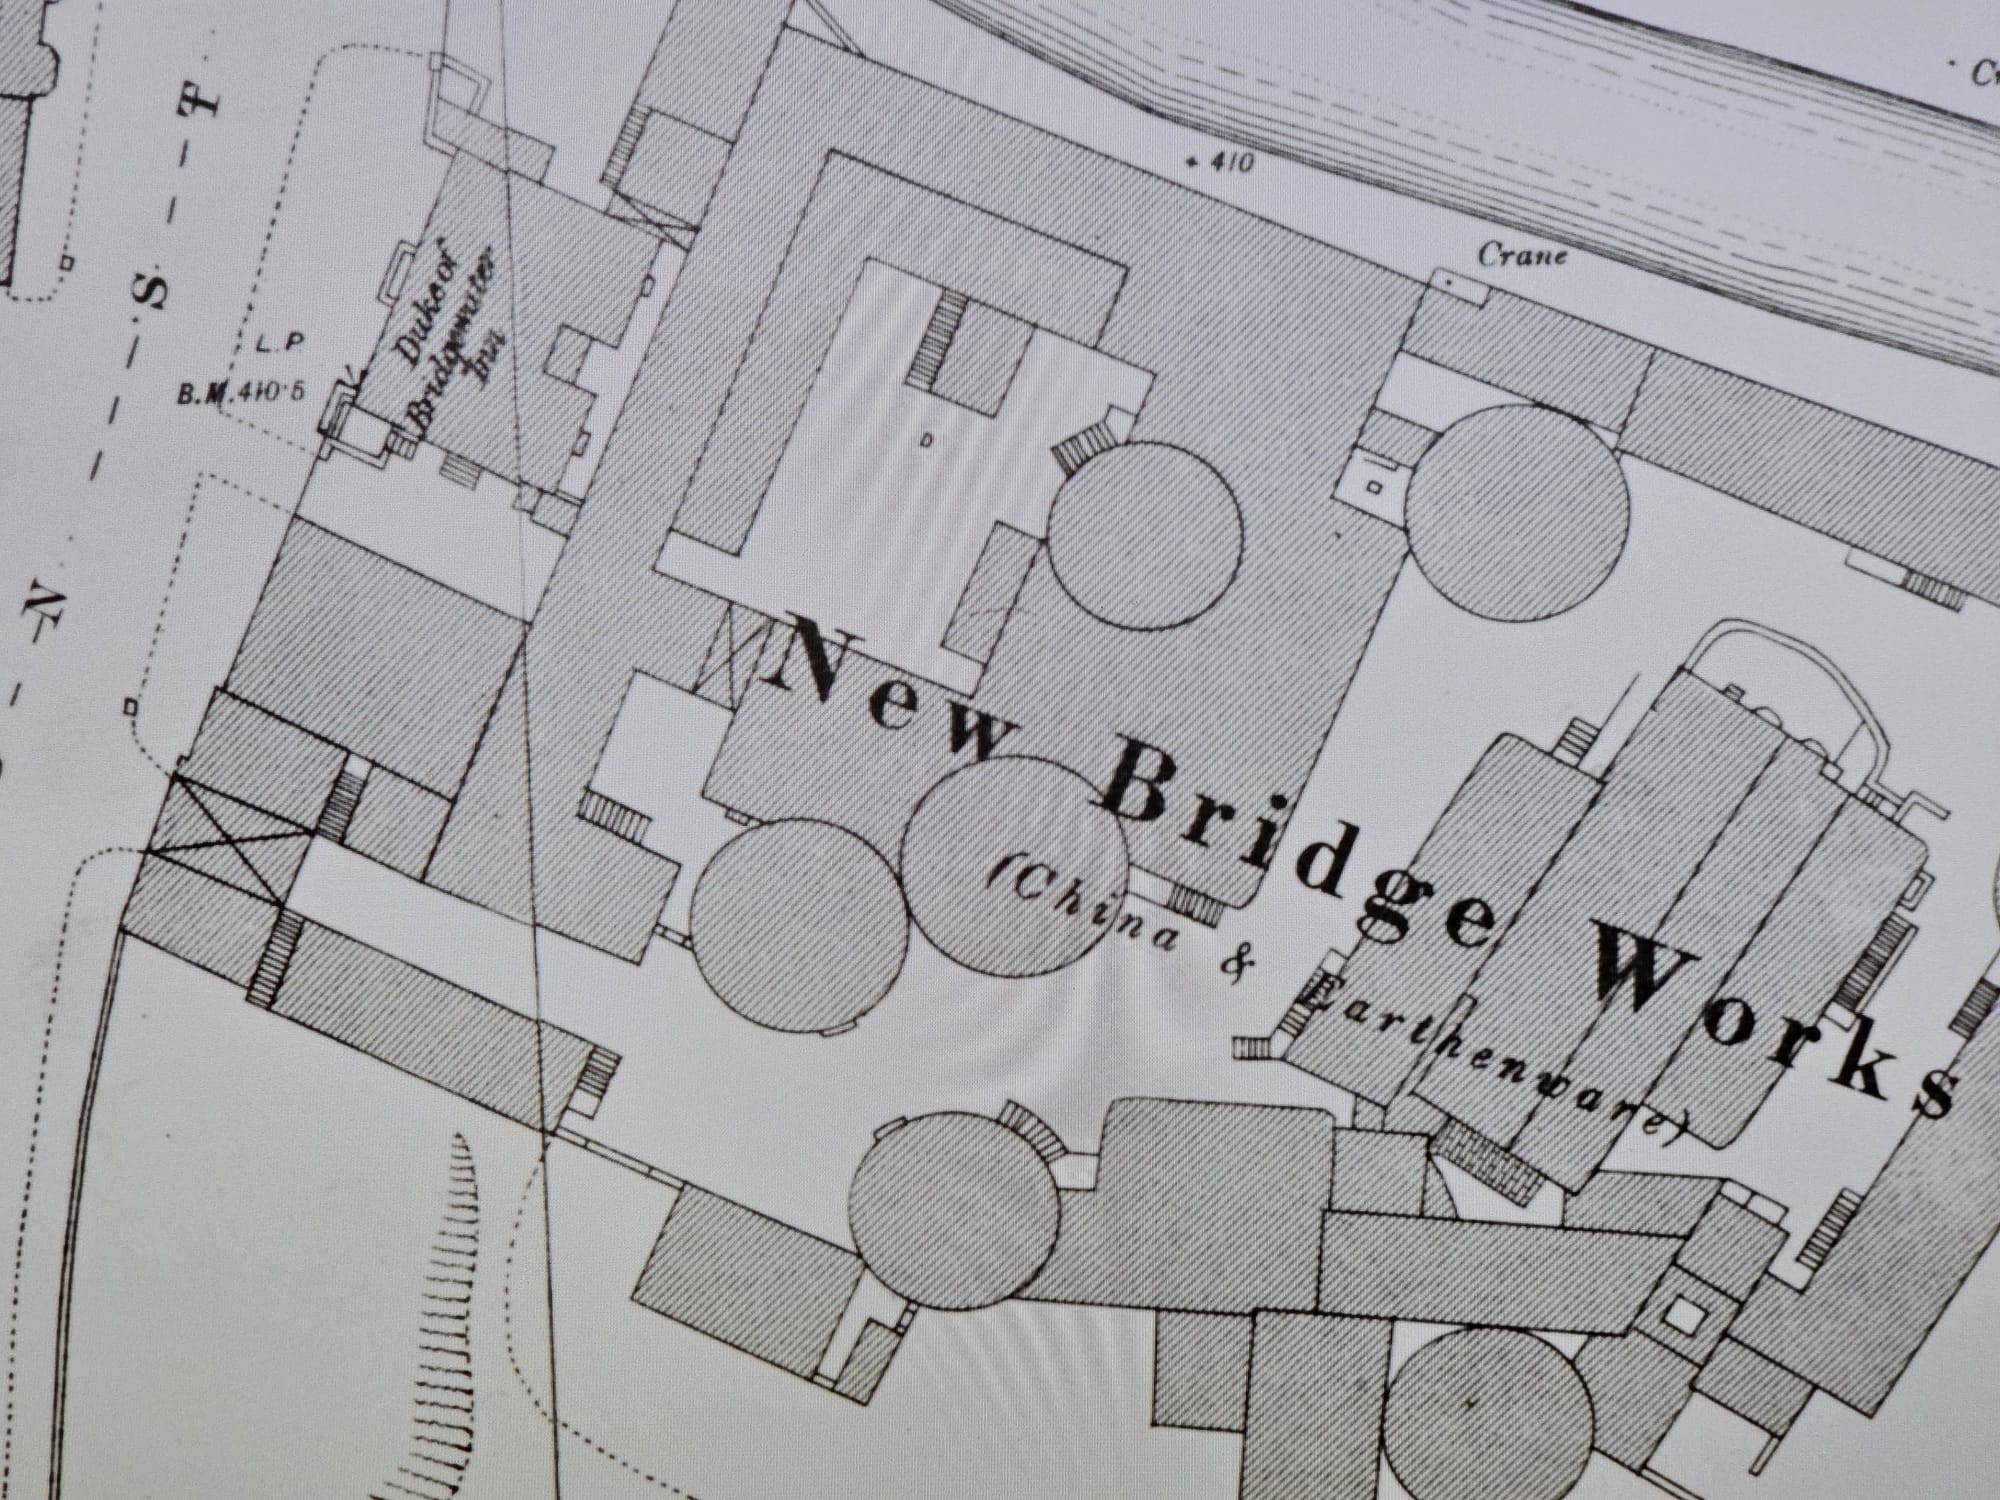 The Duke of Bridgewater Inn: A Glimpse into Longport's Past